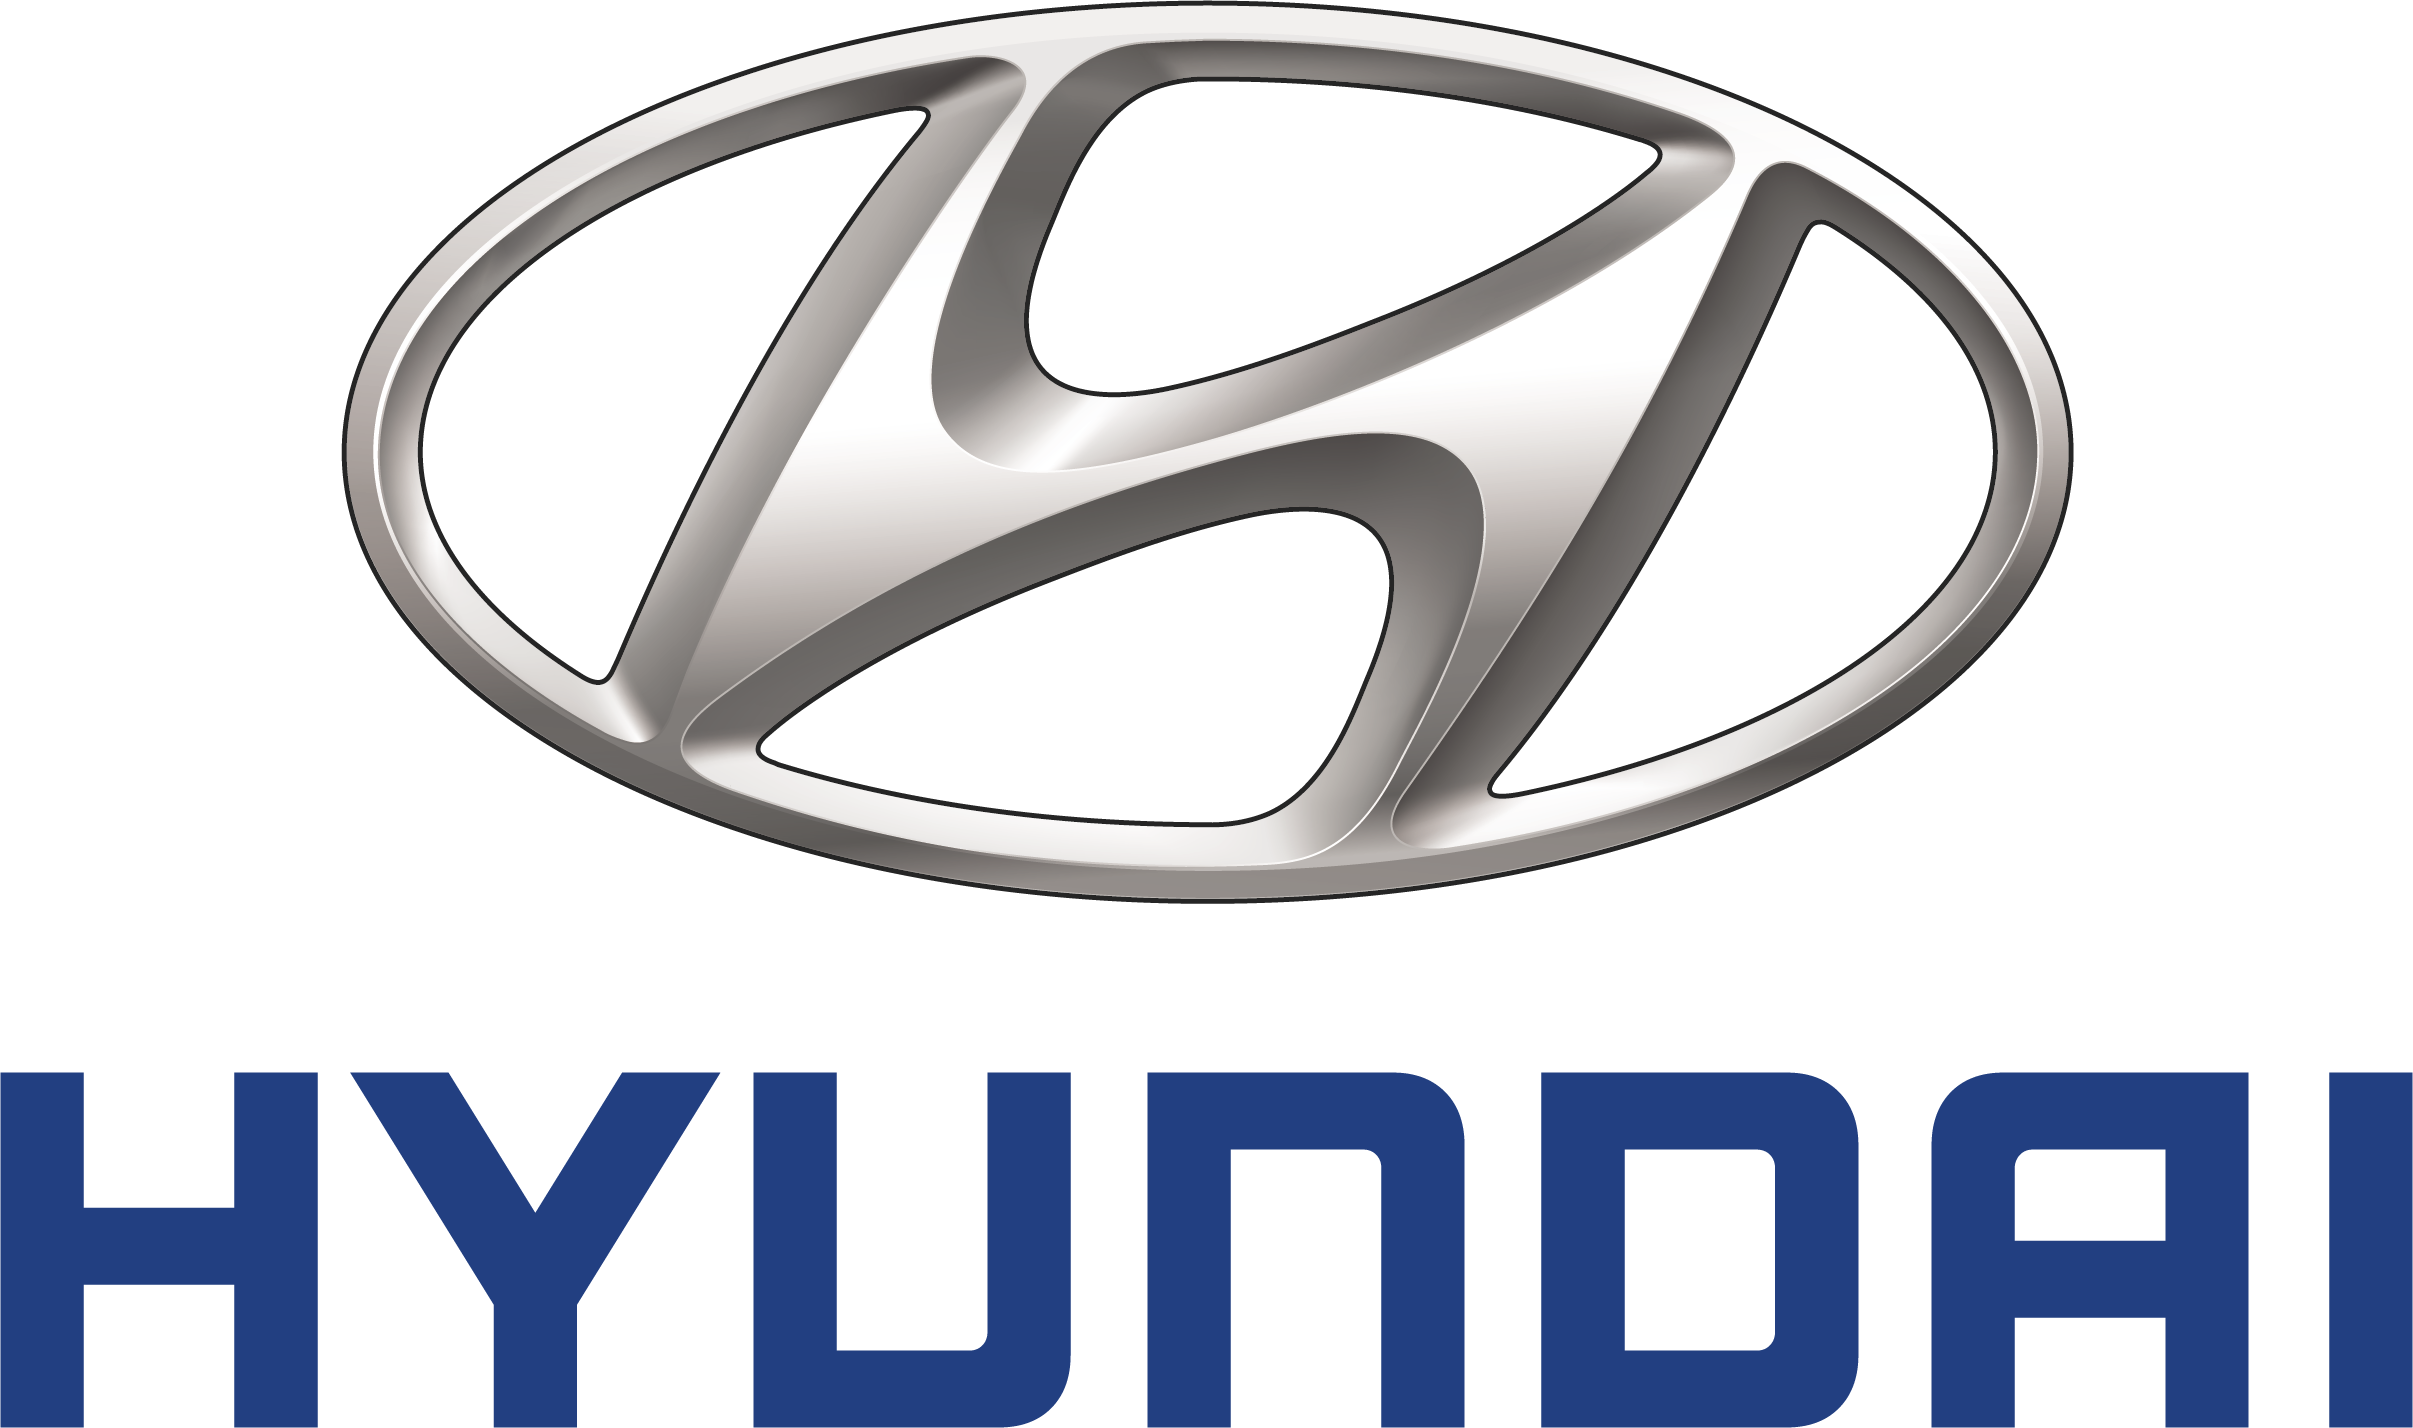 Carrosserie - Marche Pieds Hyundai